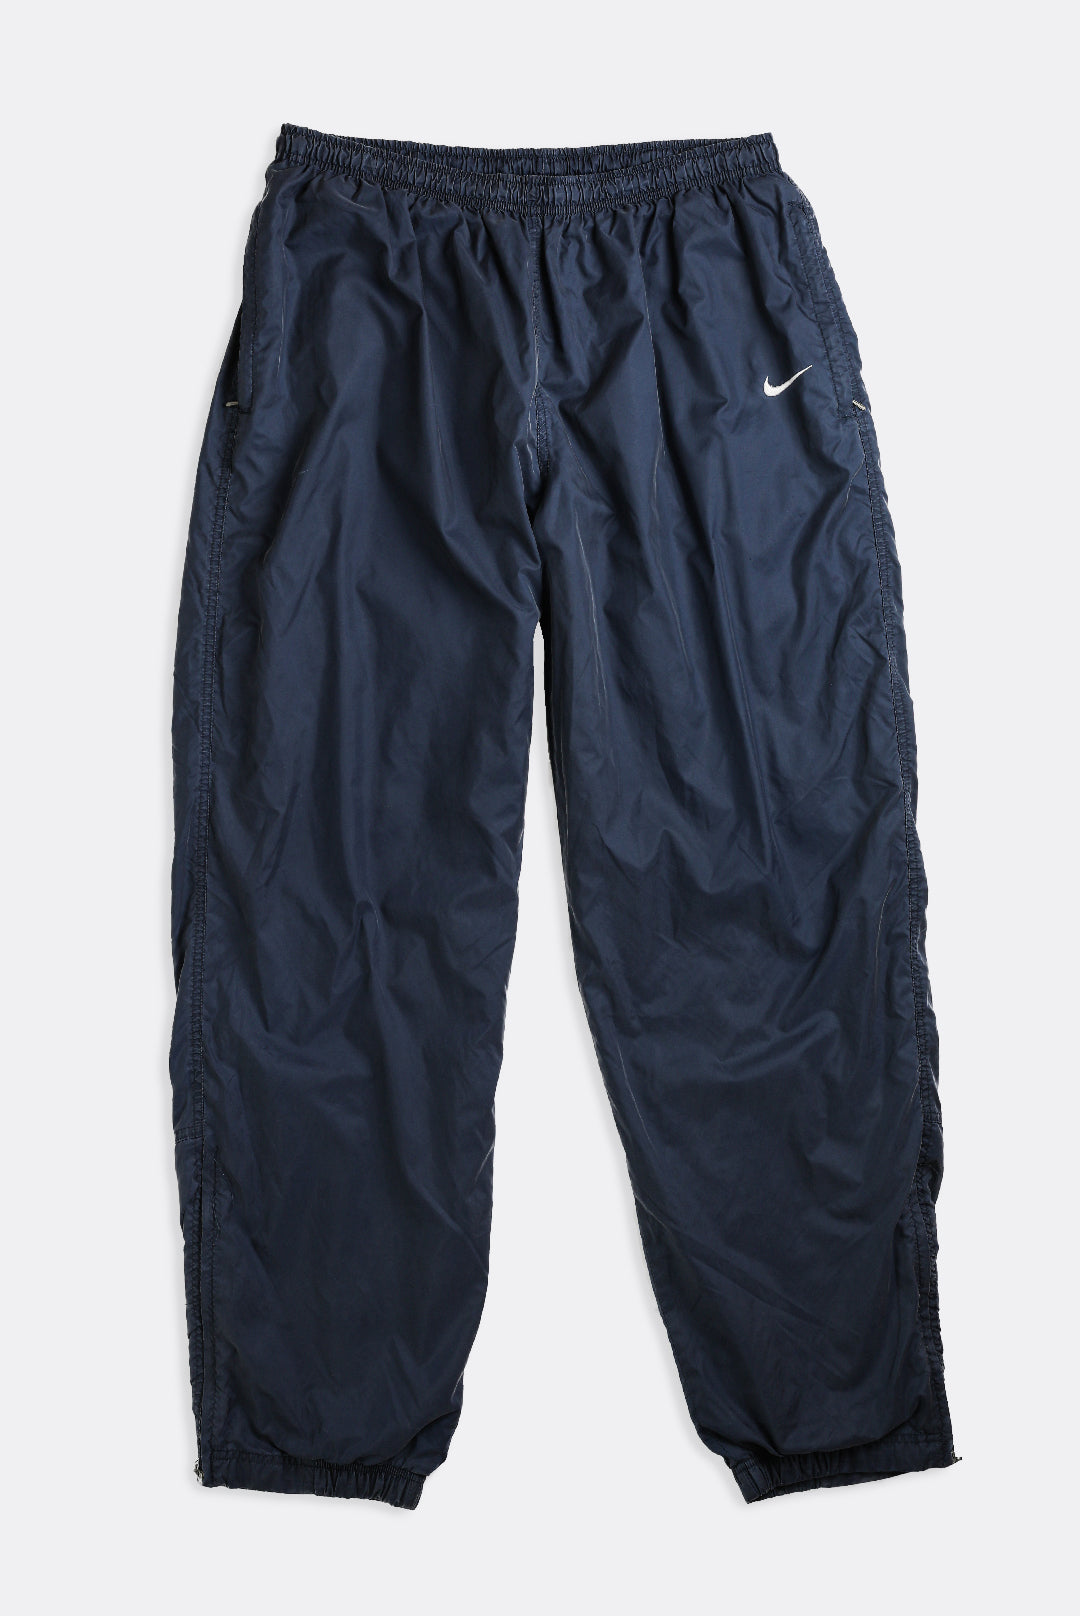 Vintage Nike Pants Boys XL Black Gray Windbreakers Warm Ups Youth